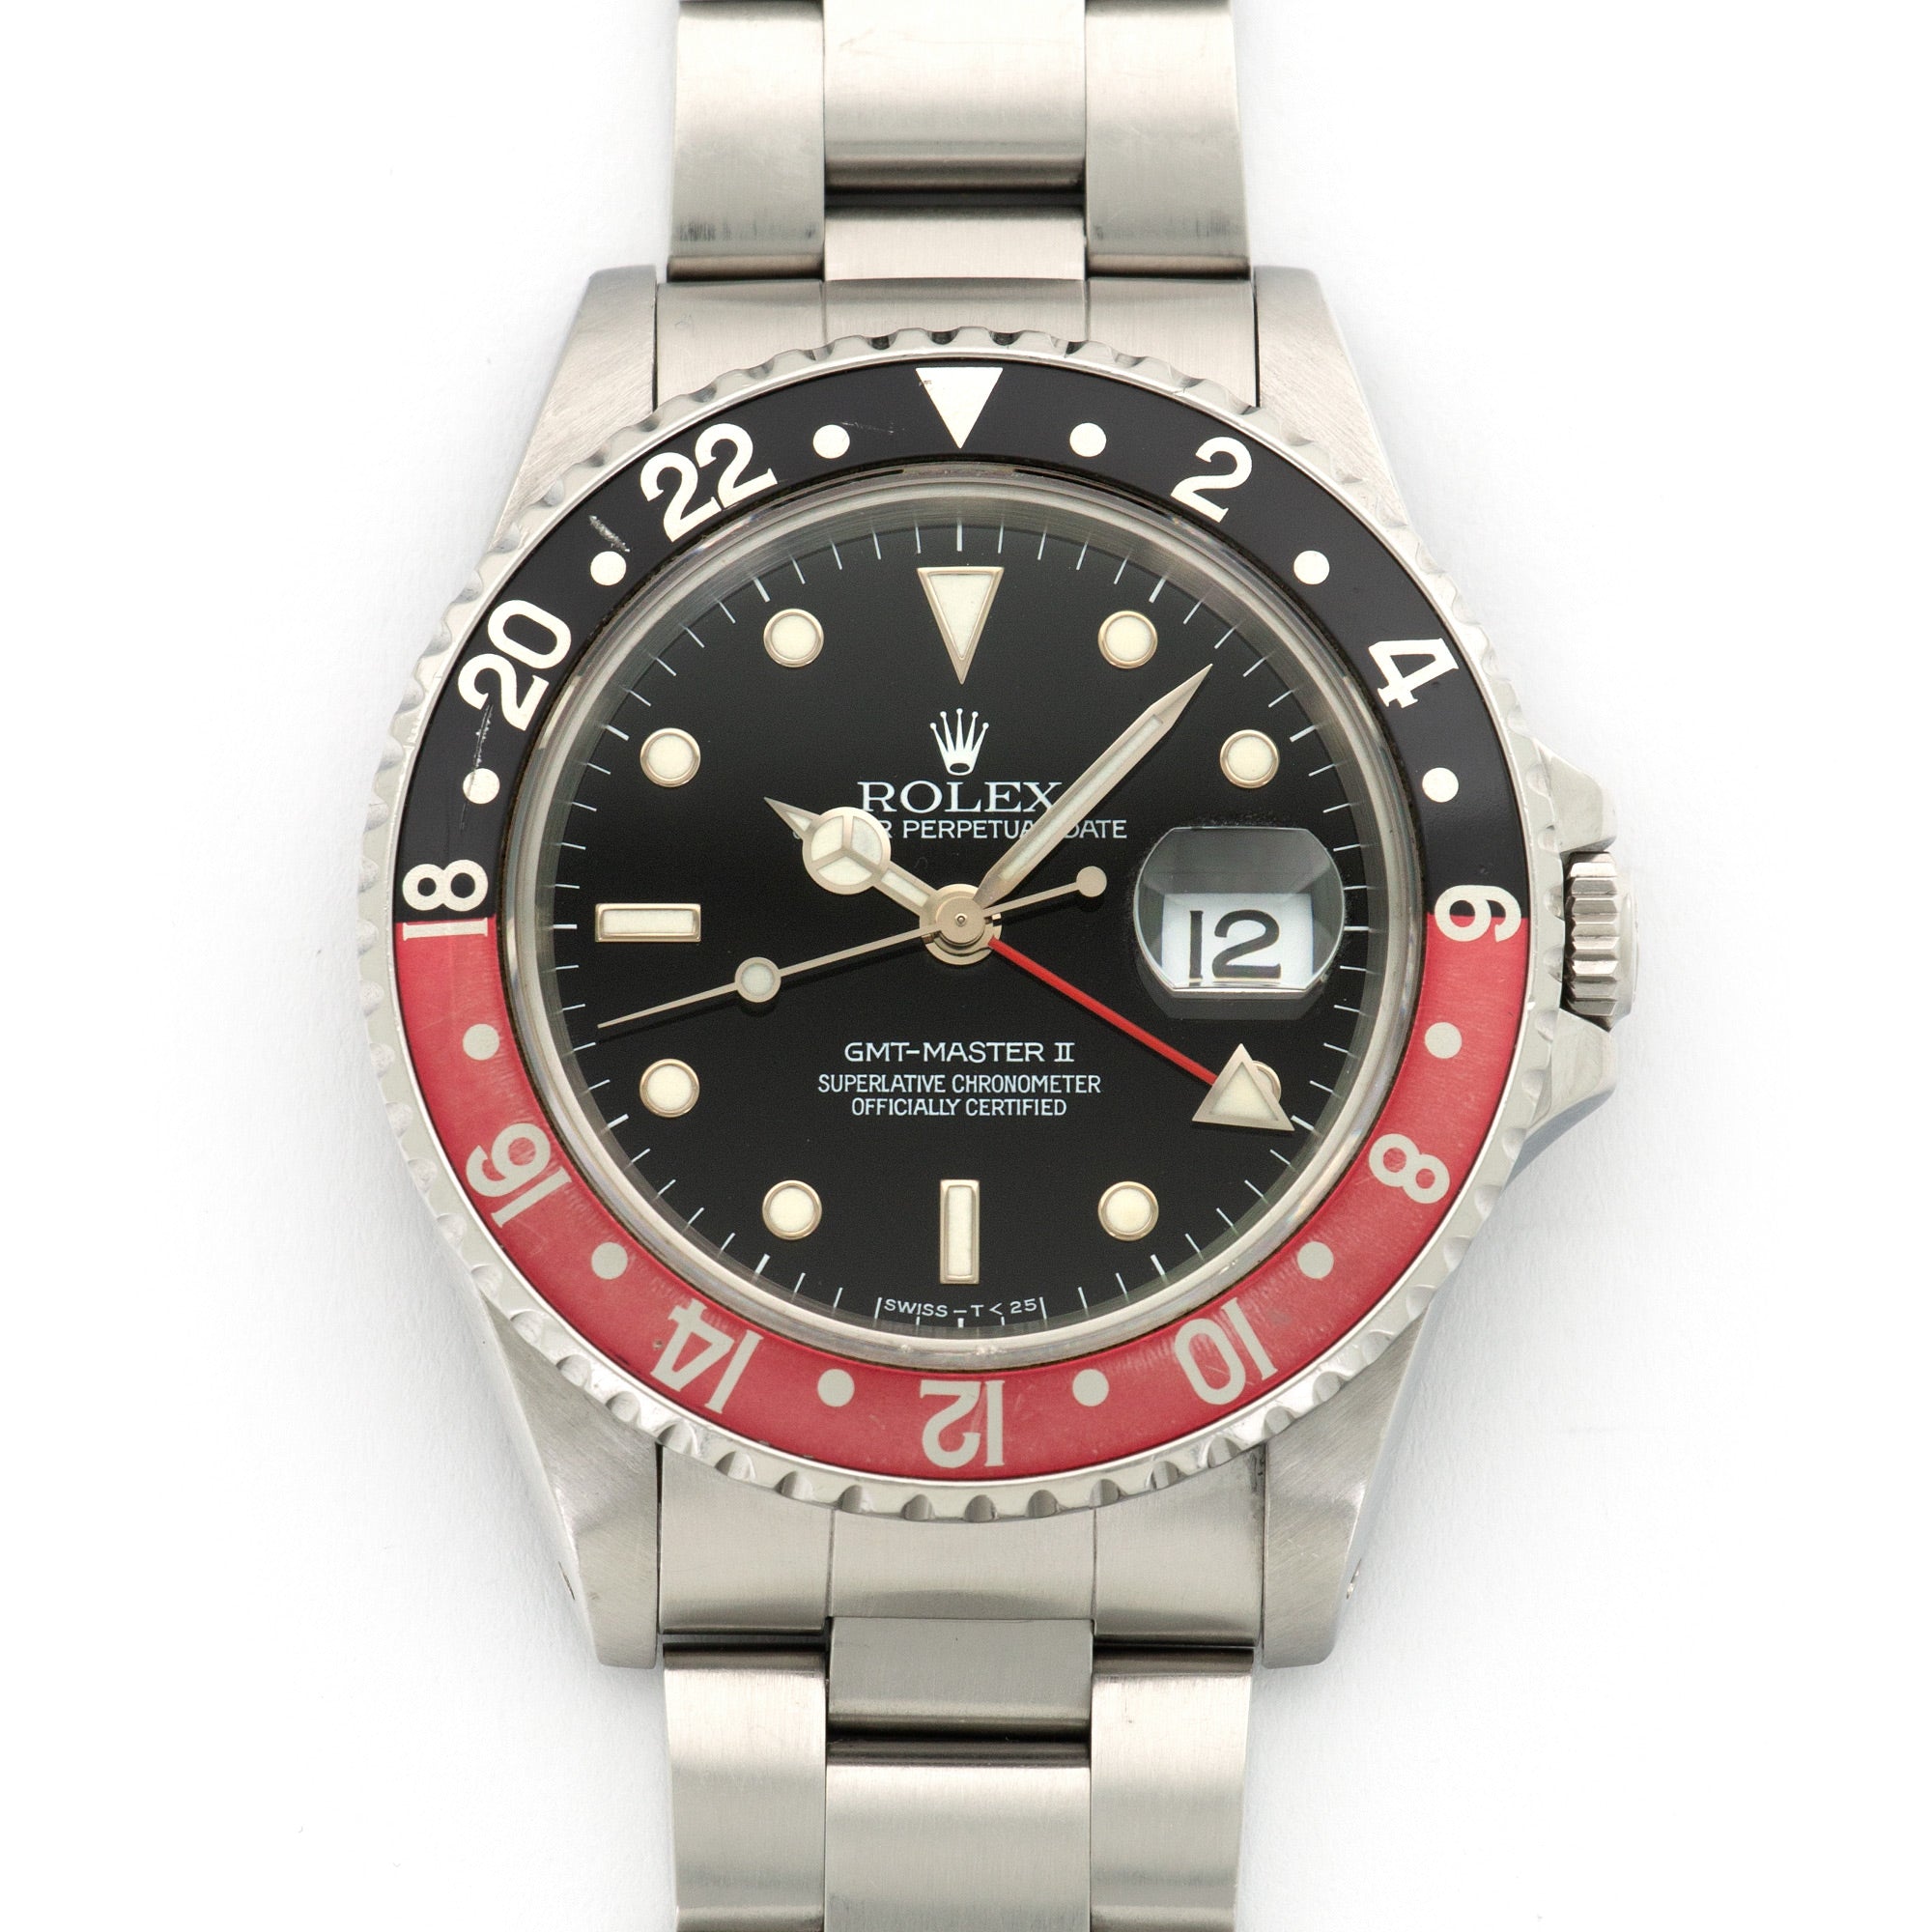 Rolex - Rolex GMT-Master II Coke Watch Ref. 16710 - The Keystone Watches